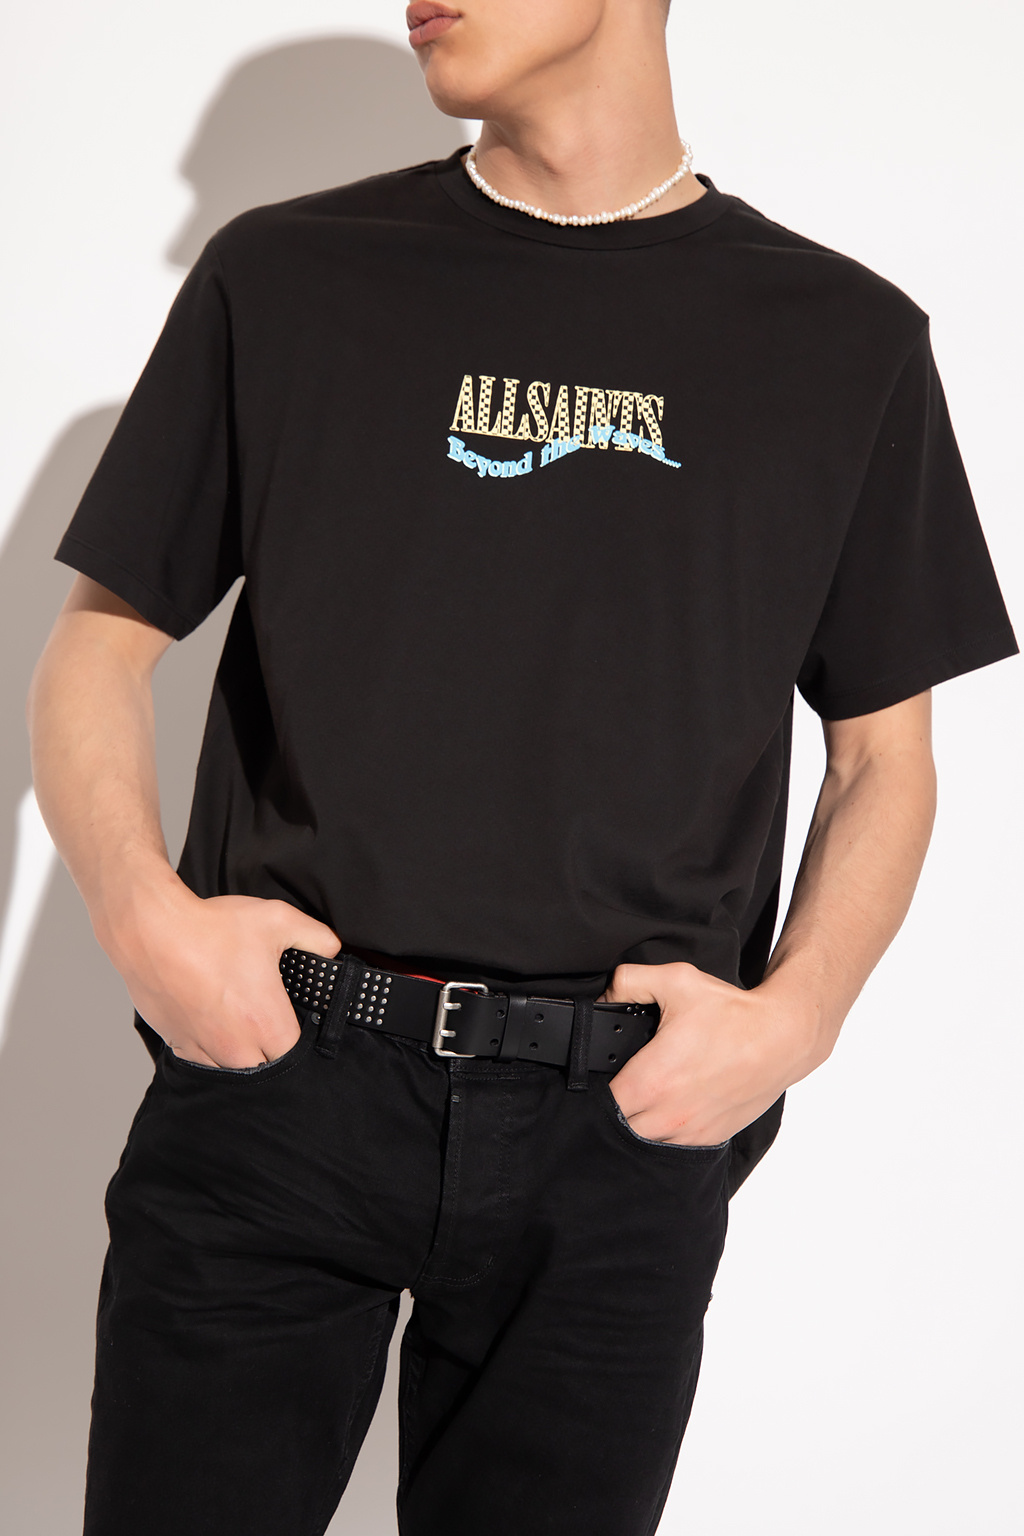 AllSaints ‘Check Up’ T-shirt